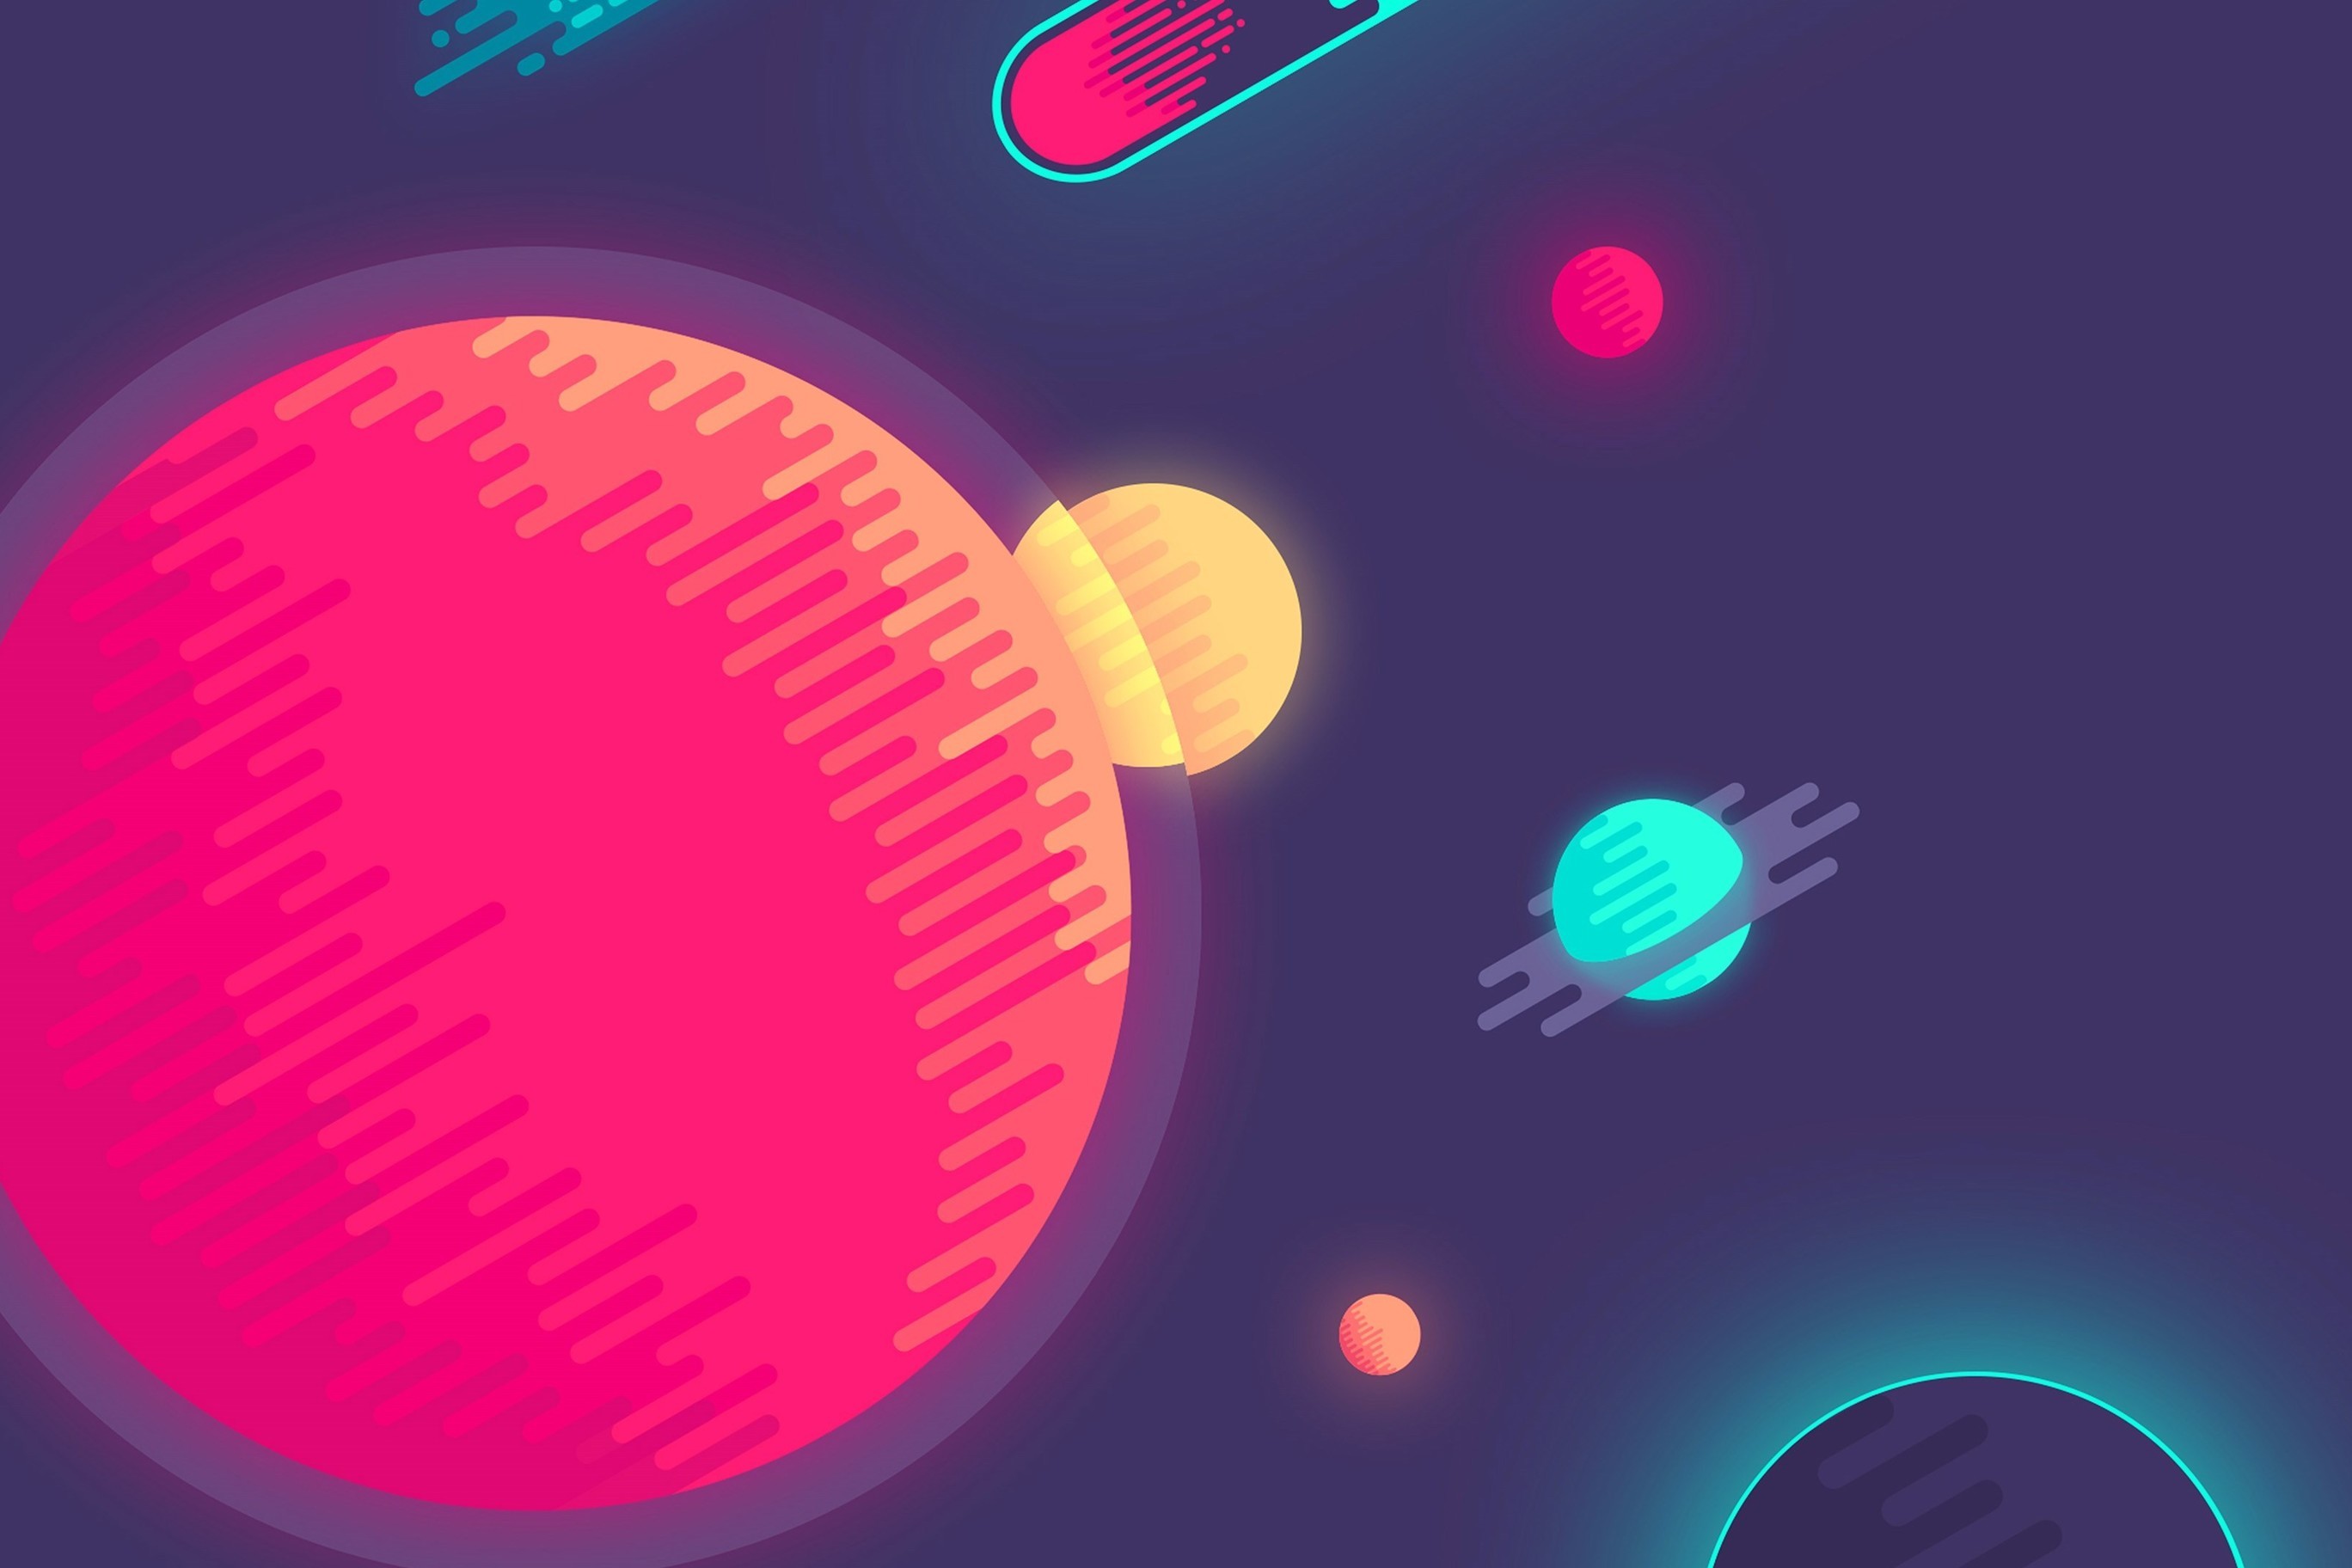 Wallpaper - Cartoon Space Desktop Backgrounds - HD Wallpaper 